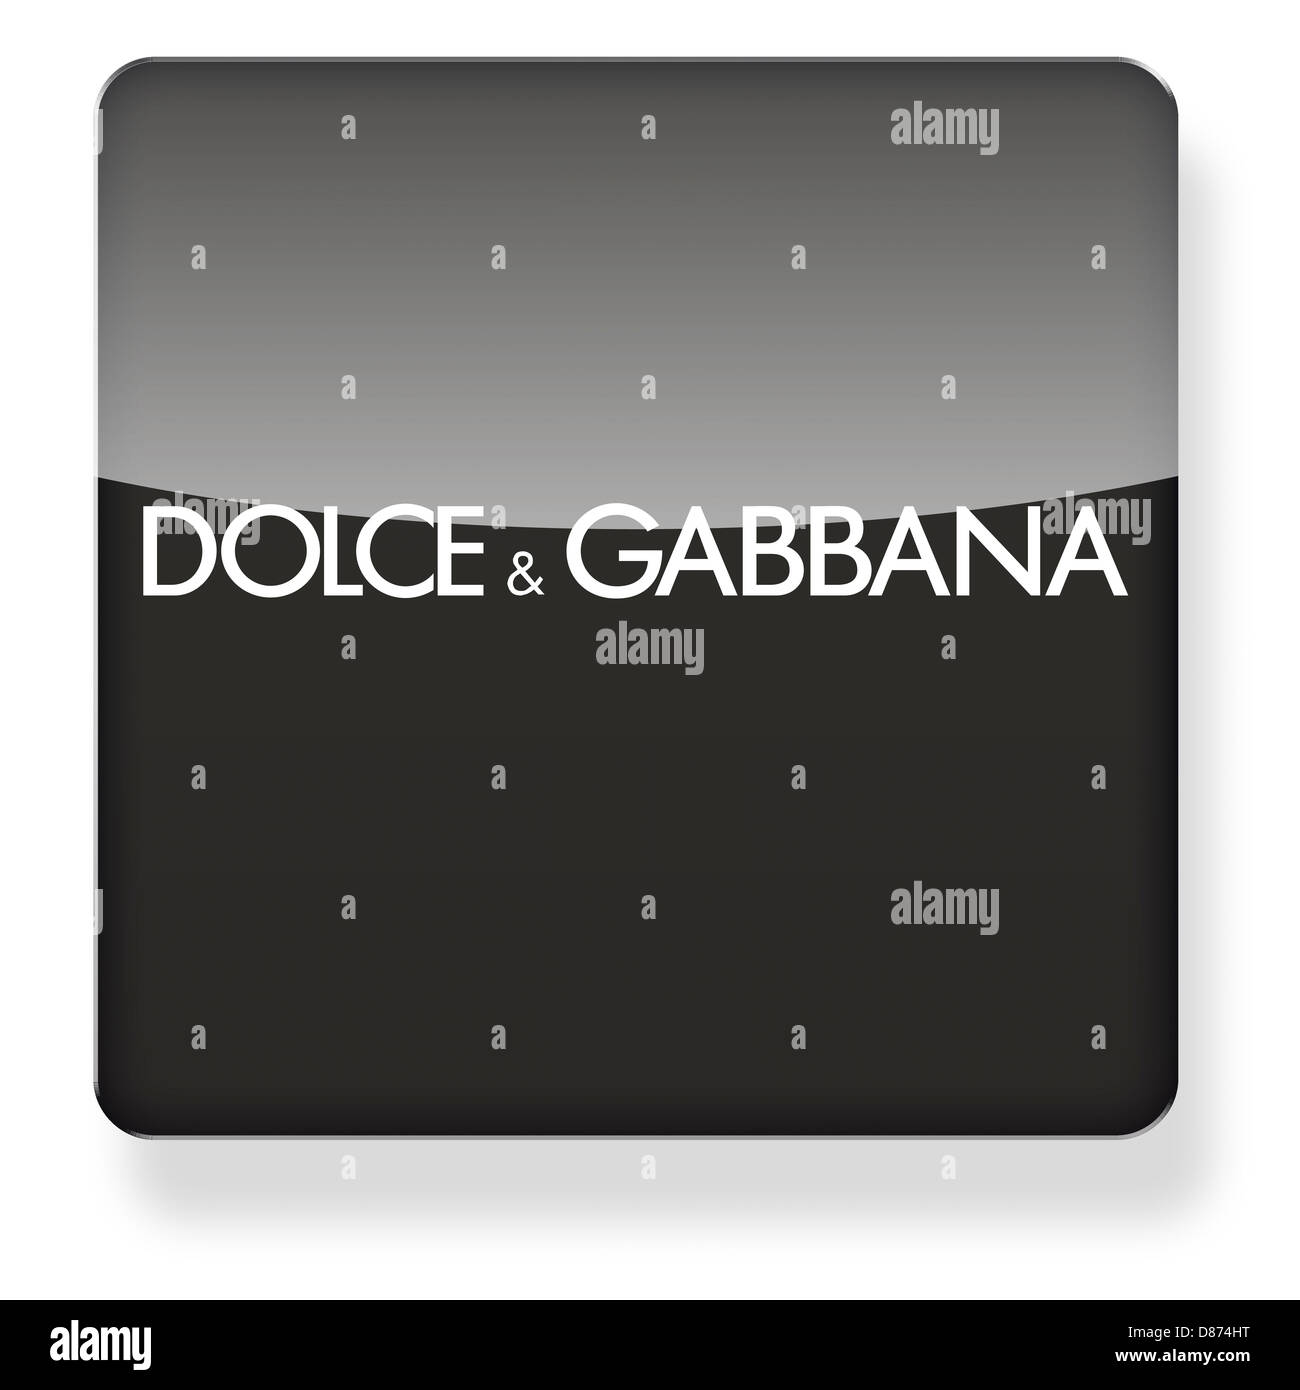 dolce and gabbana app